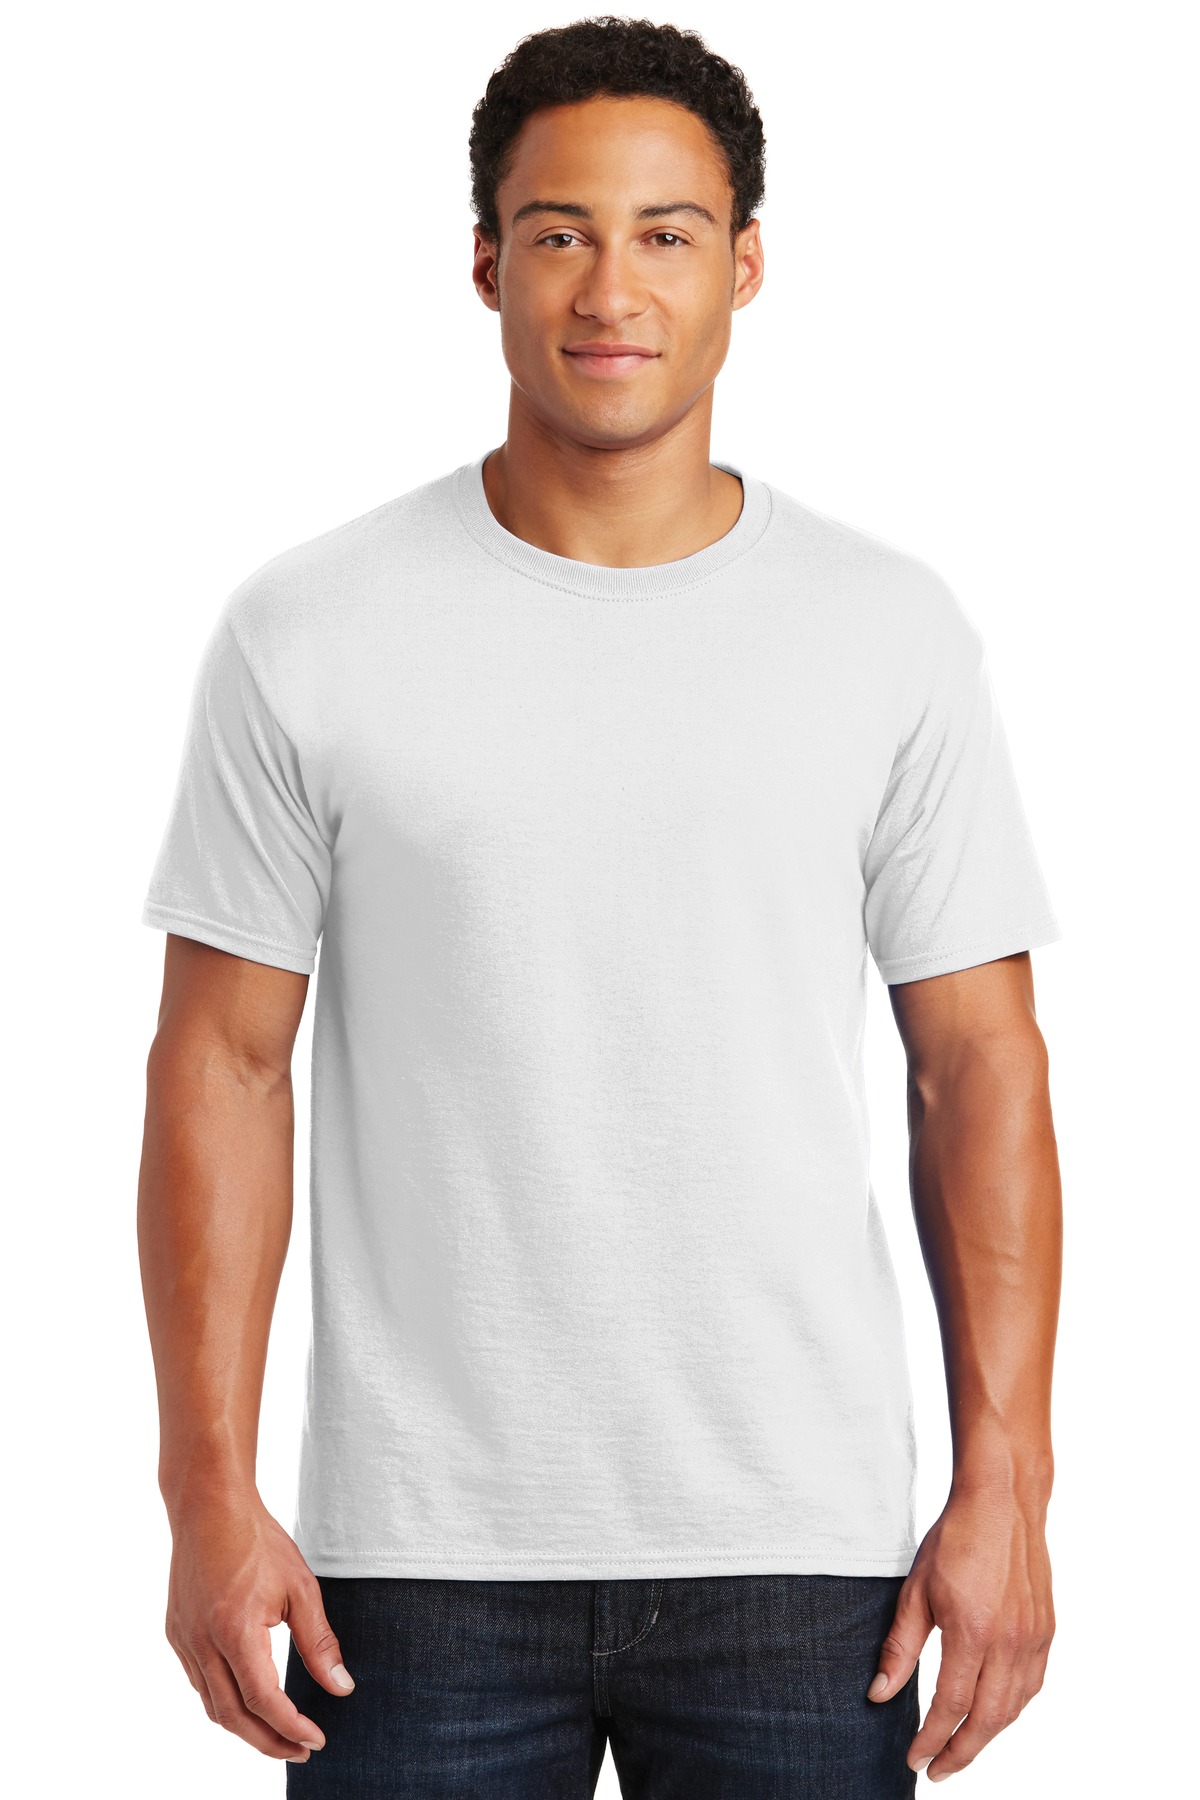 JERZEES - Dri-Power Active 50/50 Cotton/Poly T-Shirt. 29M - Tee Shirt Tim